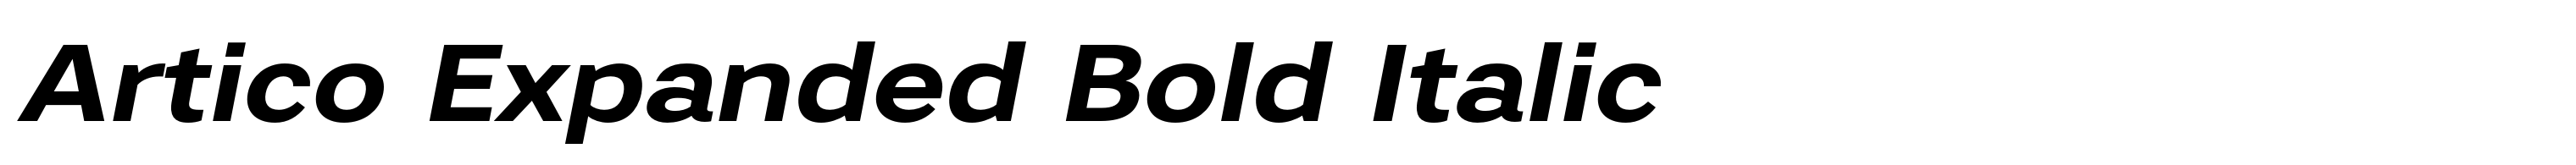 Artico Expanded Bold Italic